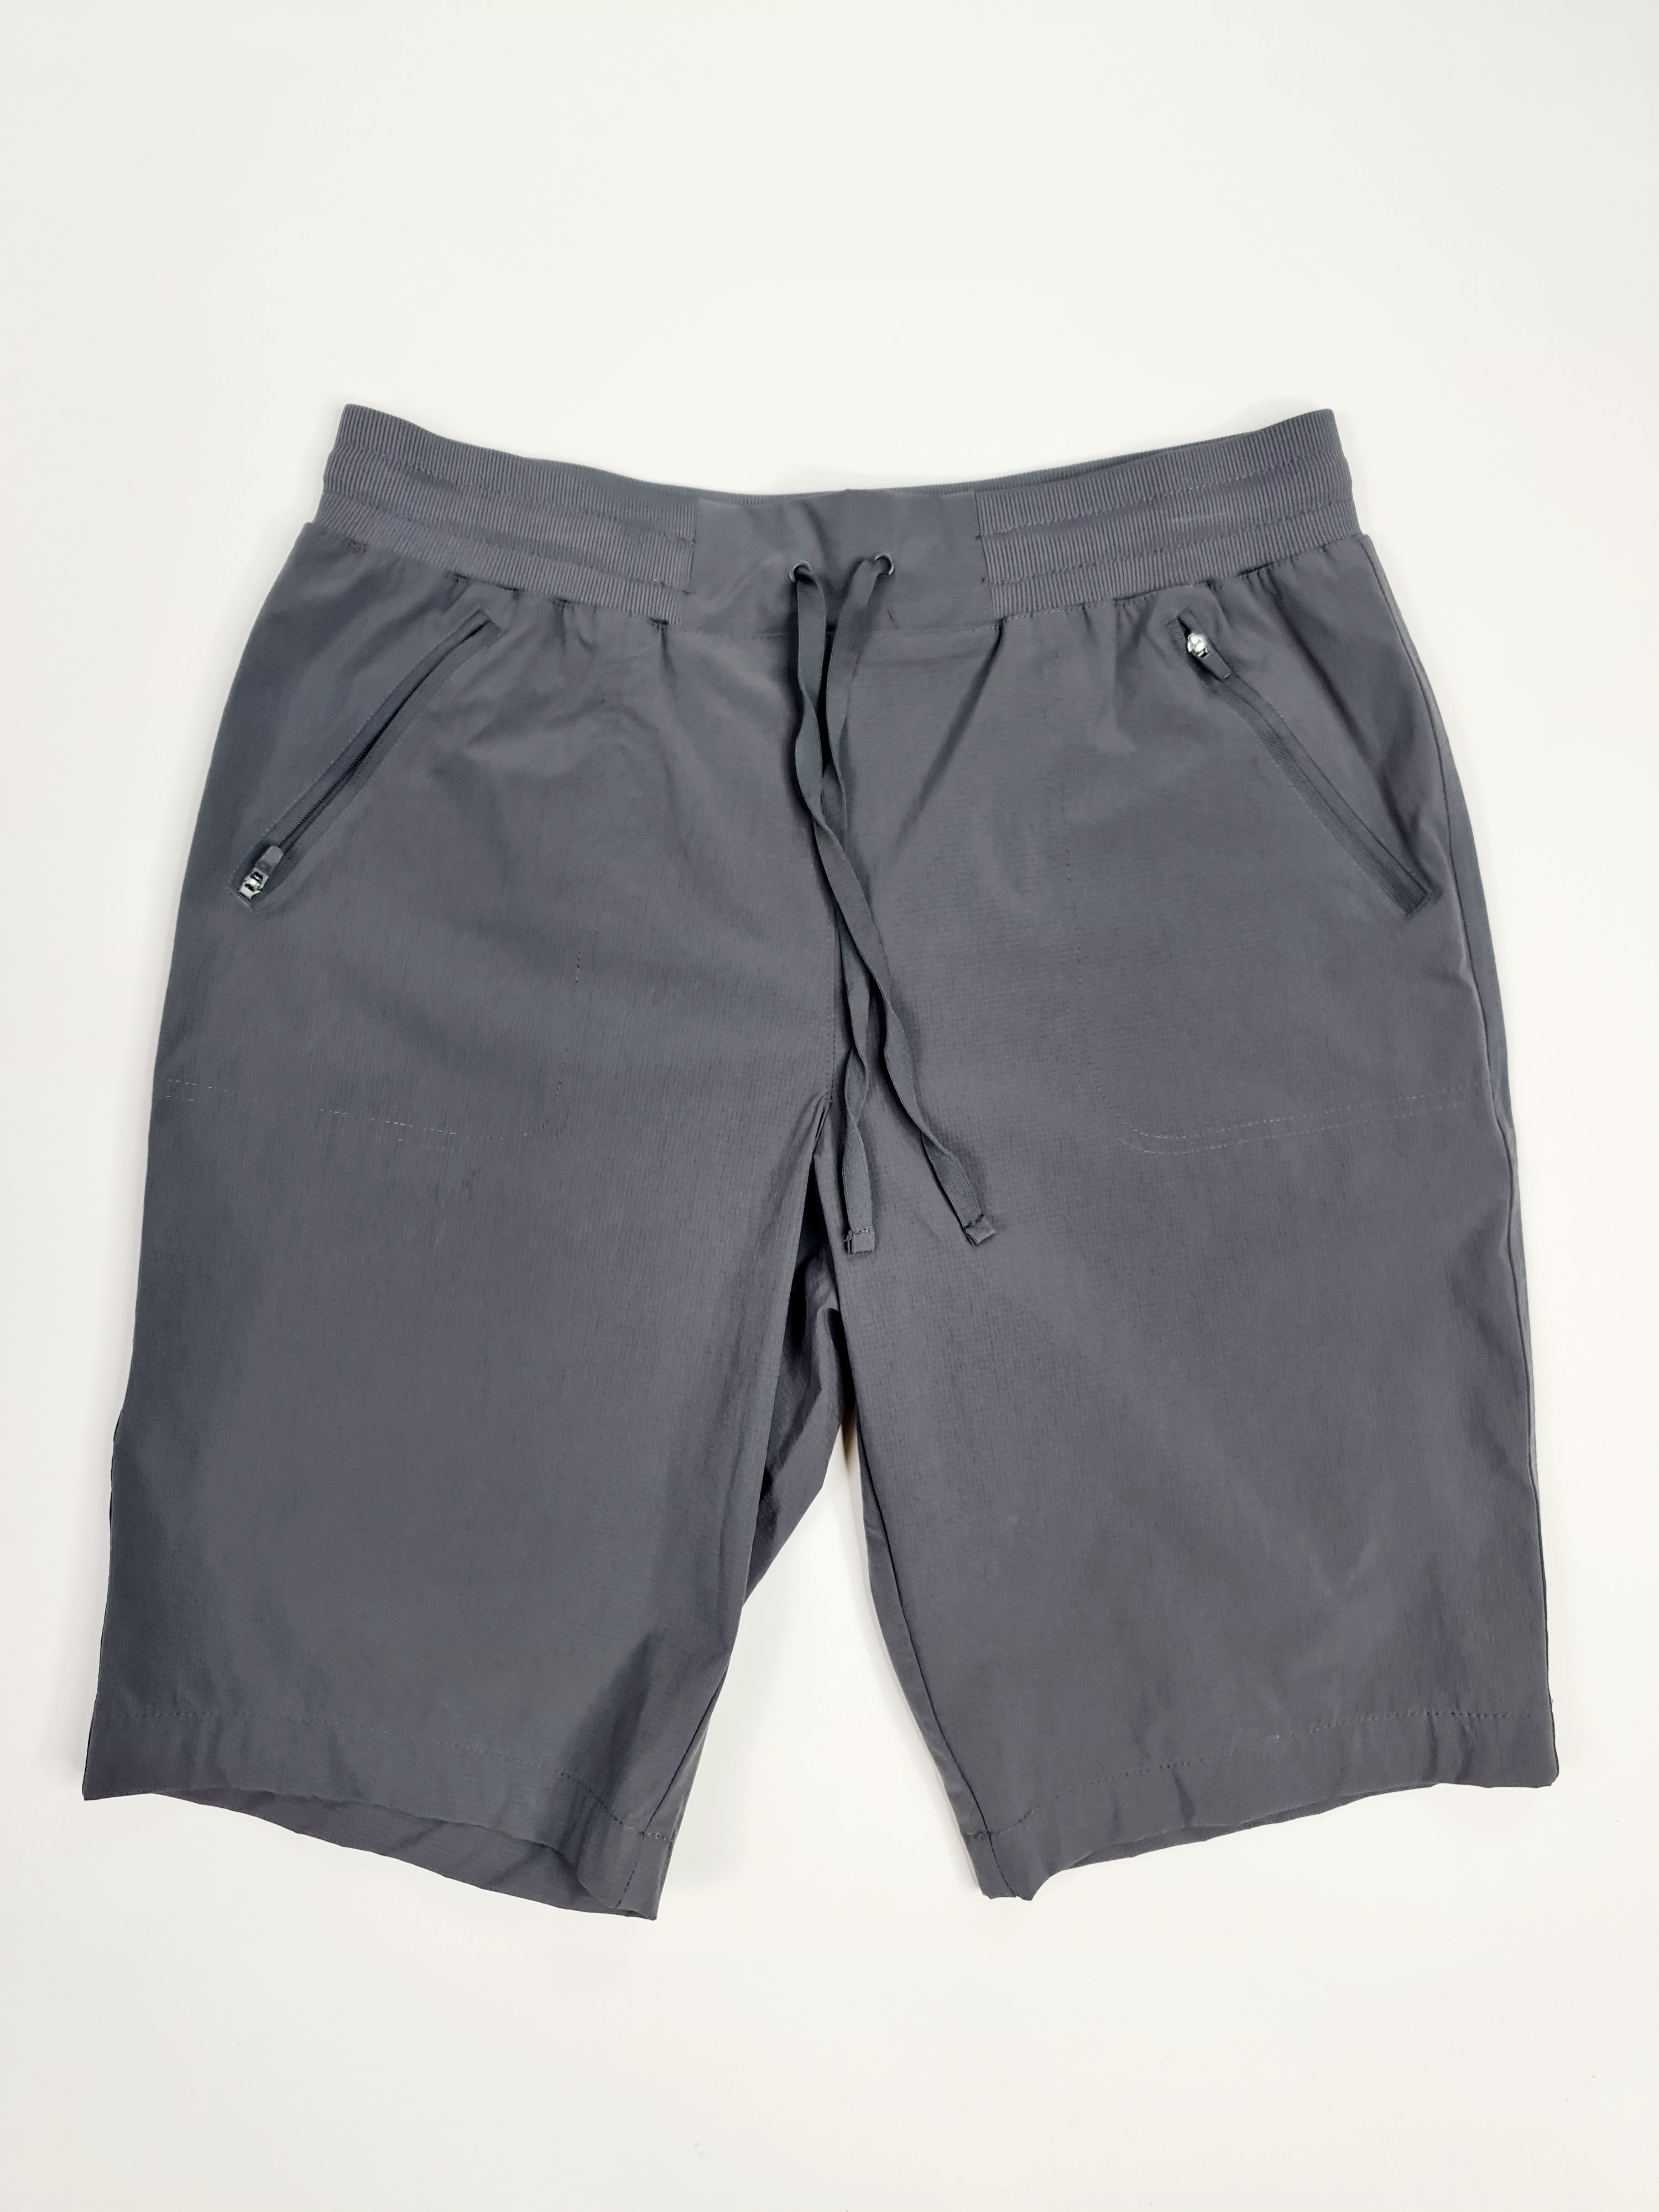 Pantalones cortos marca Mountian Warehouse - (Talla: 8) Gris